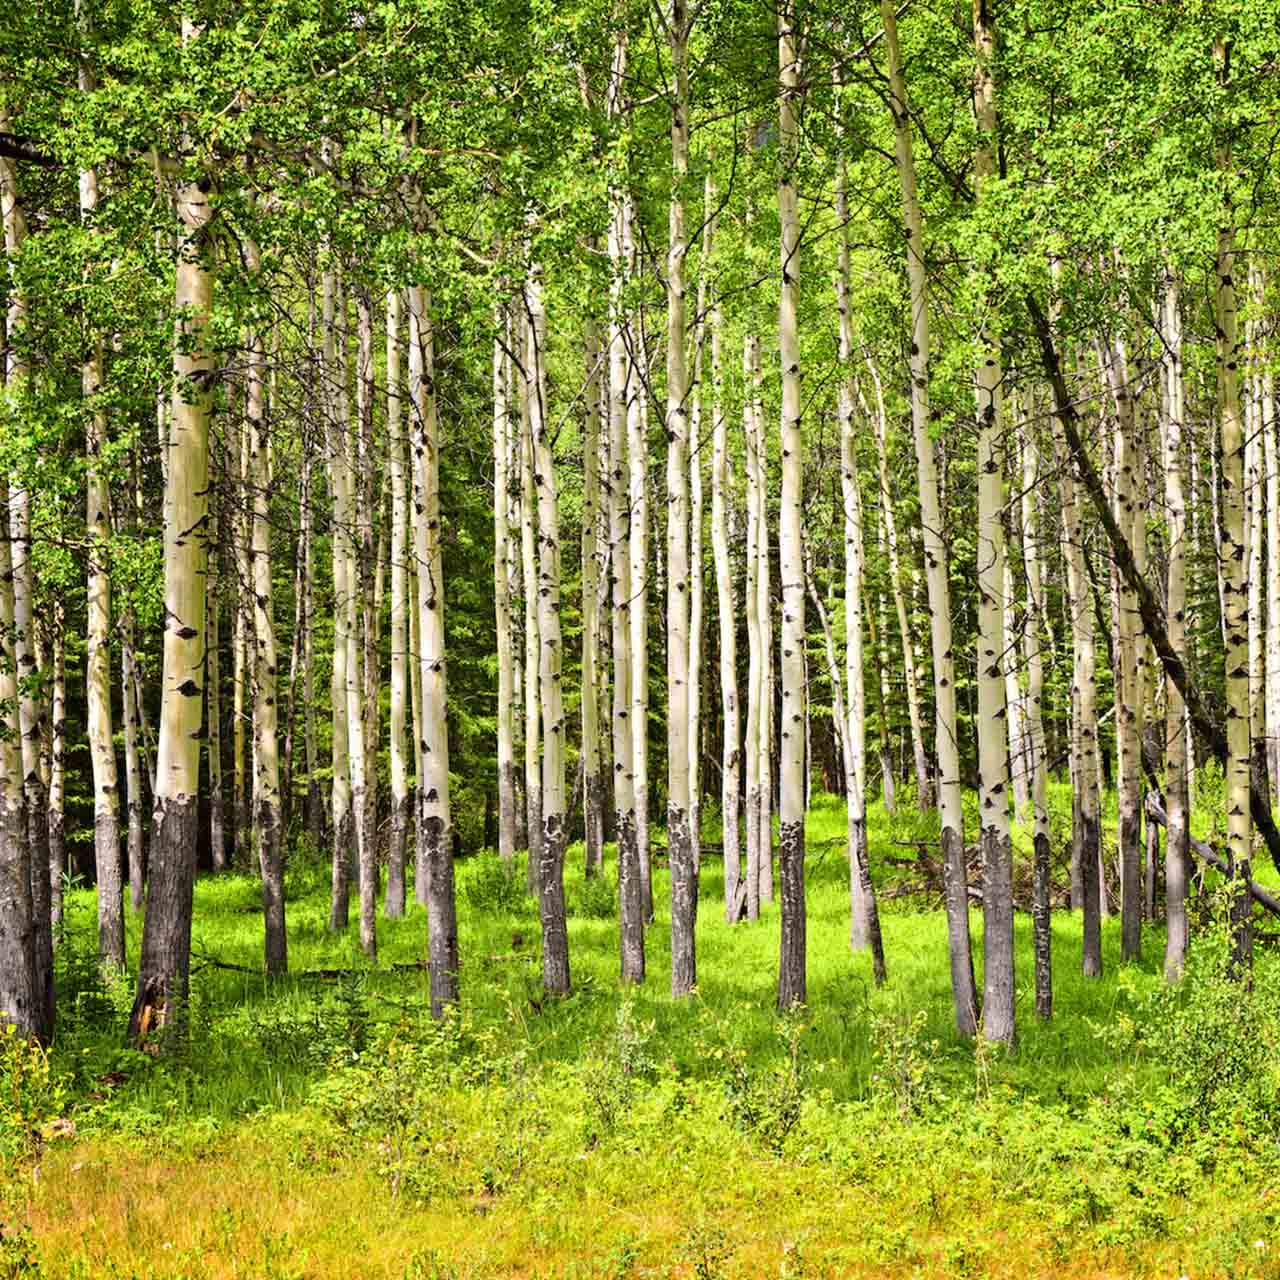 A green Aspen tree woodland